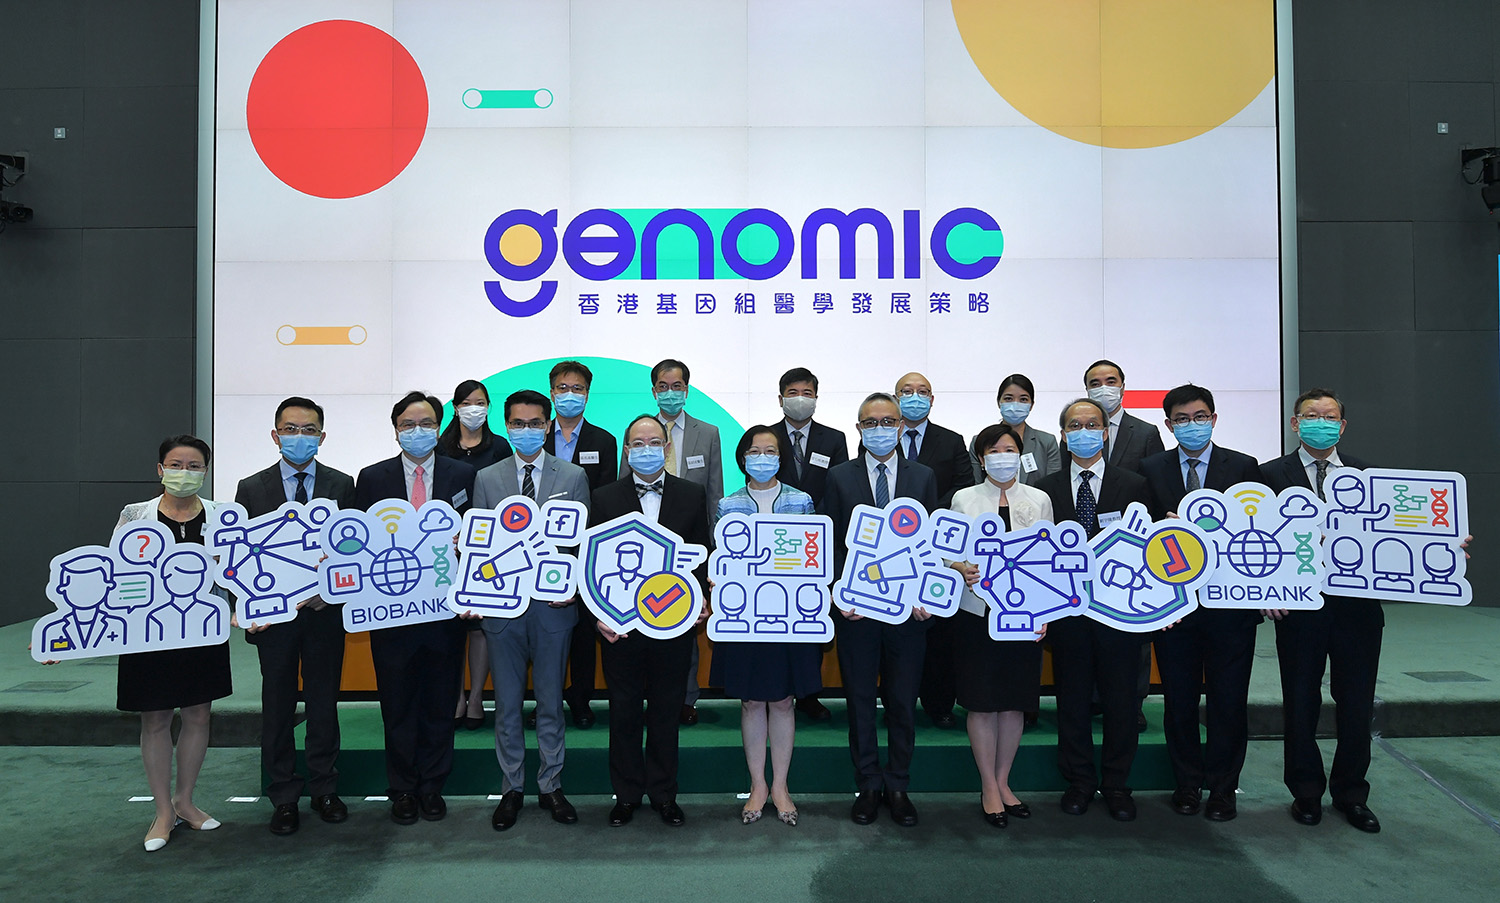 Strategic directions set for driving genomic medicine in Hong Kong (14.5.2020)